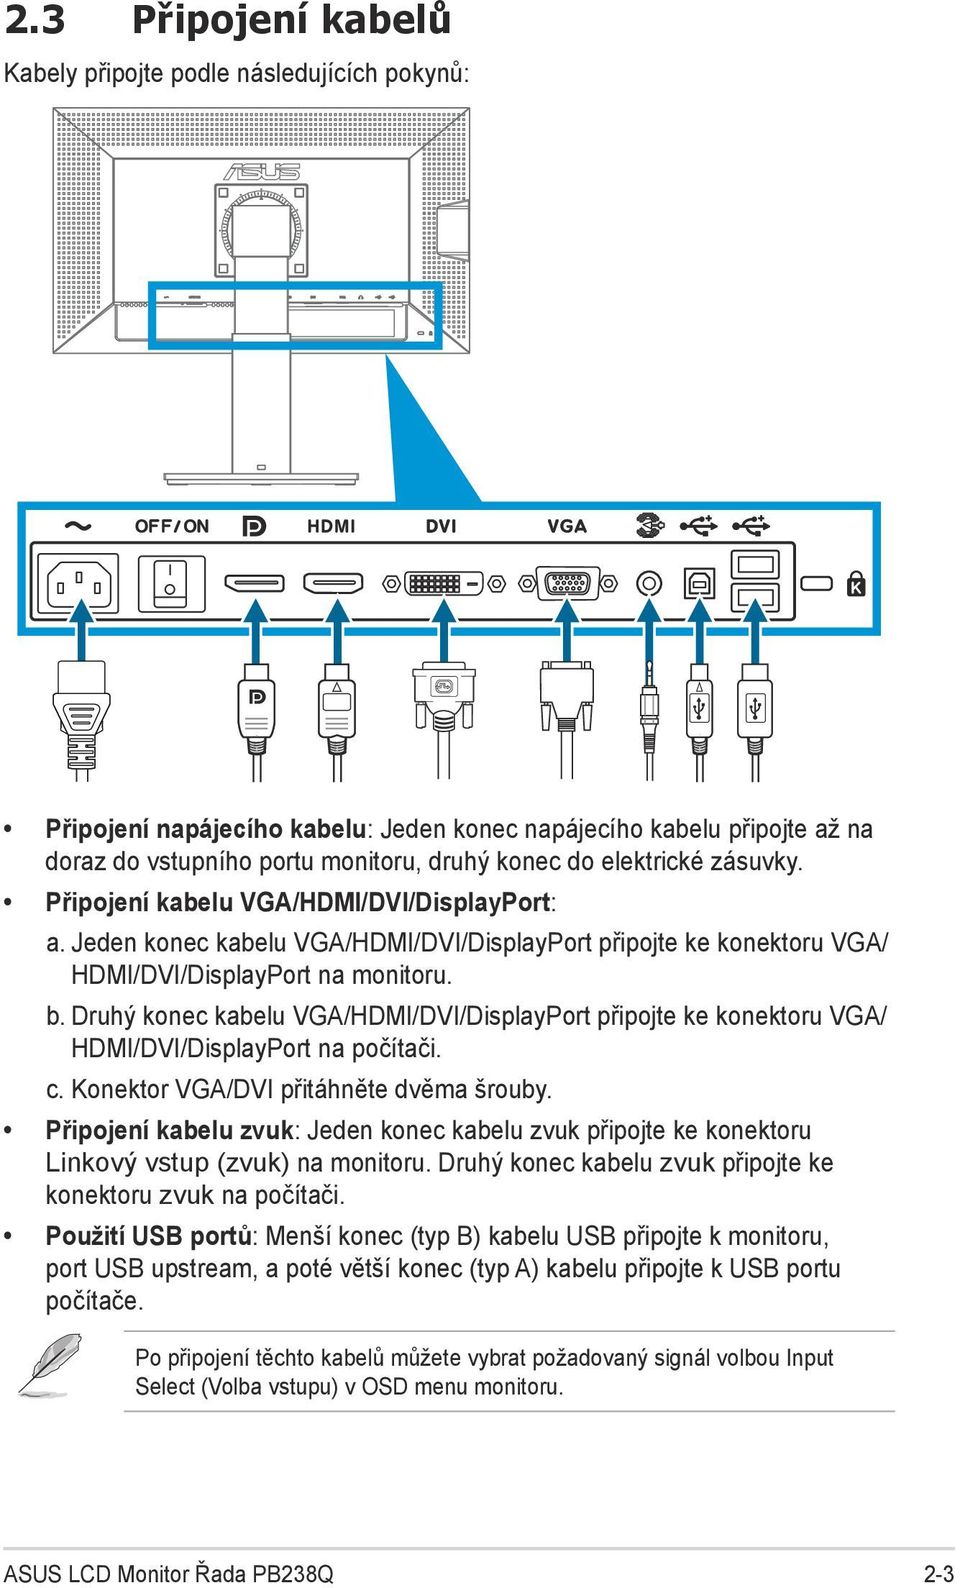 Druhý konec kabelu VGA/HDMI/DVI/DisplayPort připojte ke konektoru VGA/ HDMI/DVI/DisplayPort na počítači. c. Konektor VGA/DVI přitáhněte dvěma šrouby.